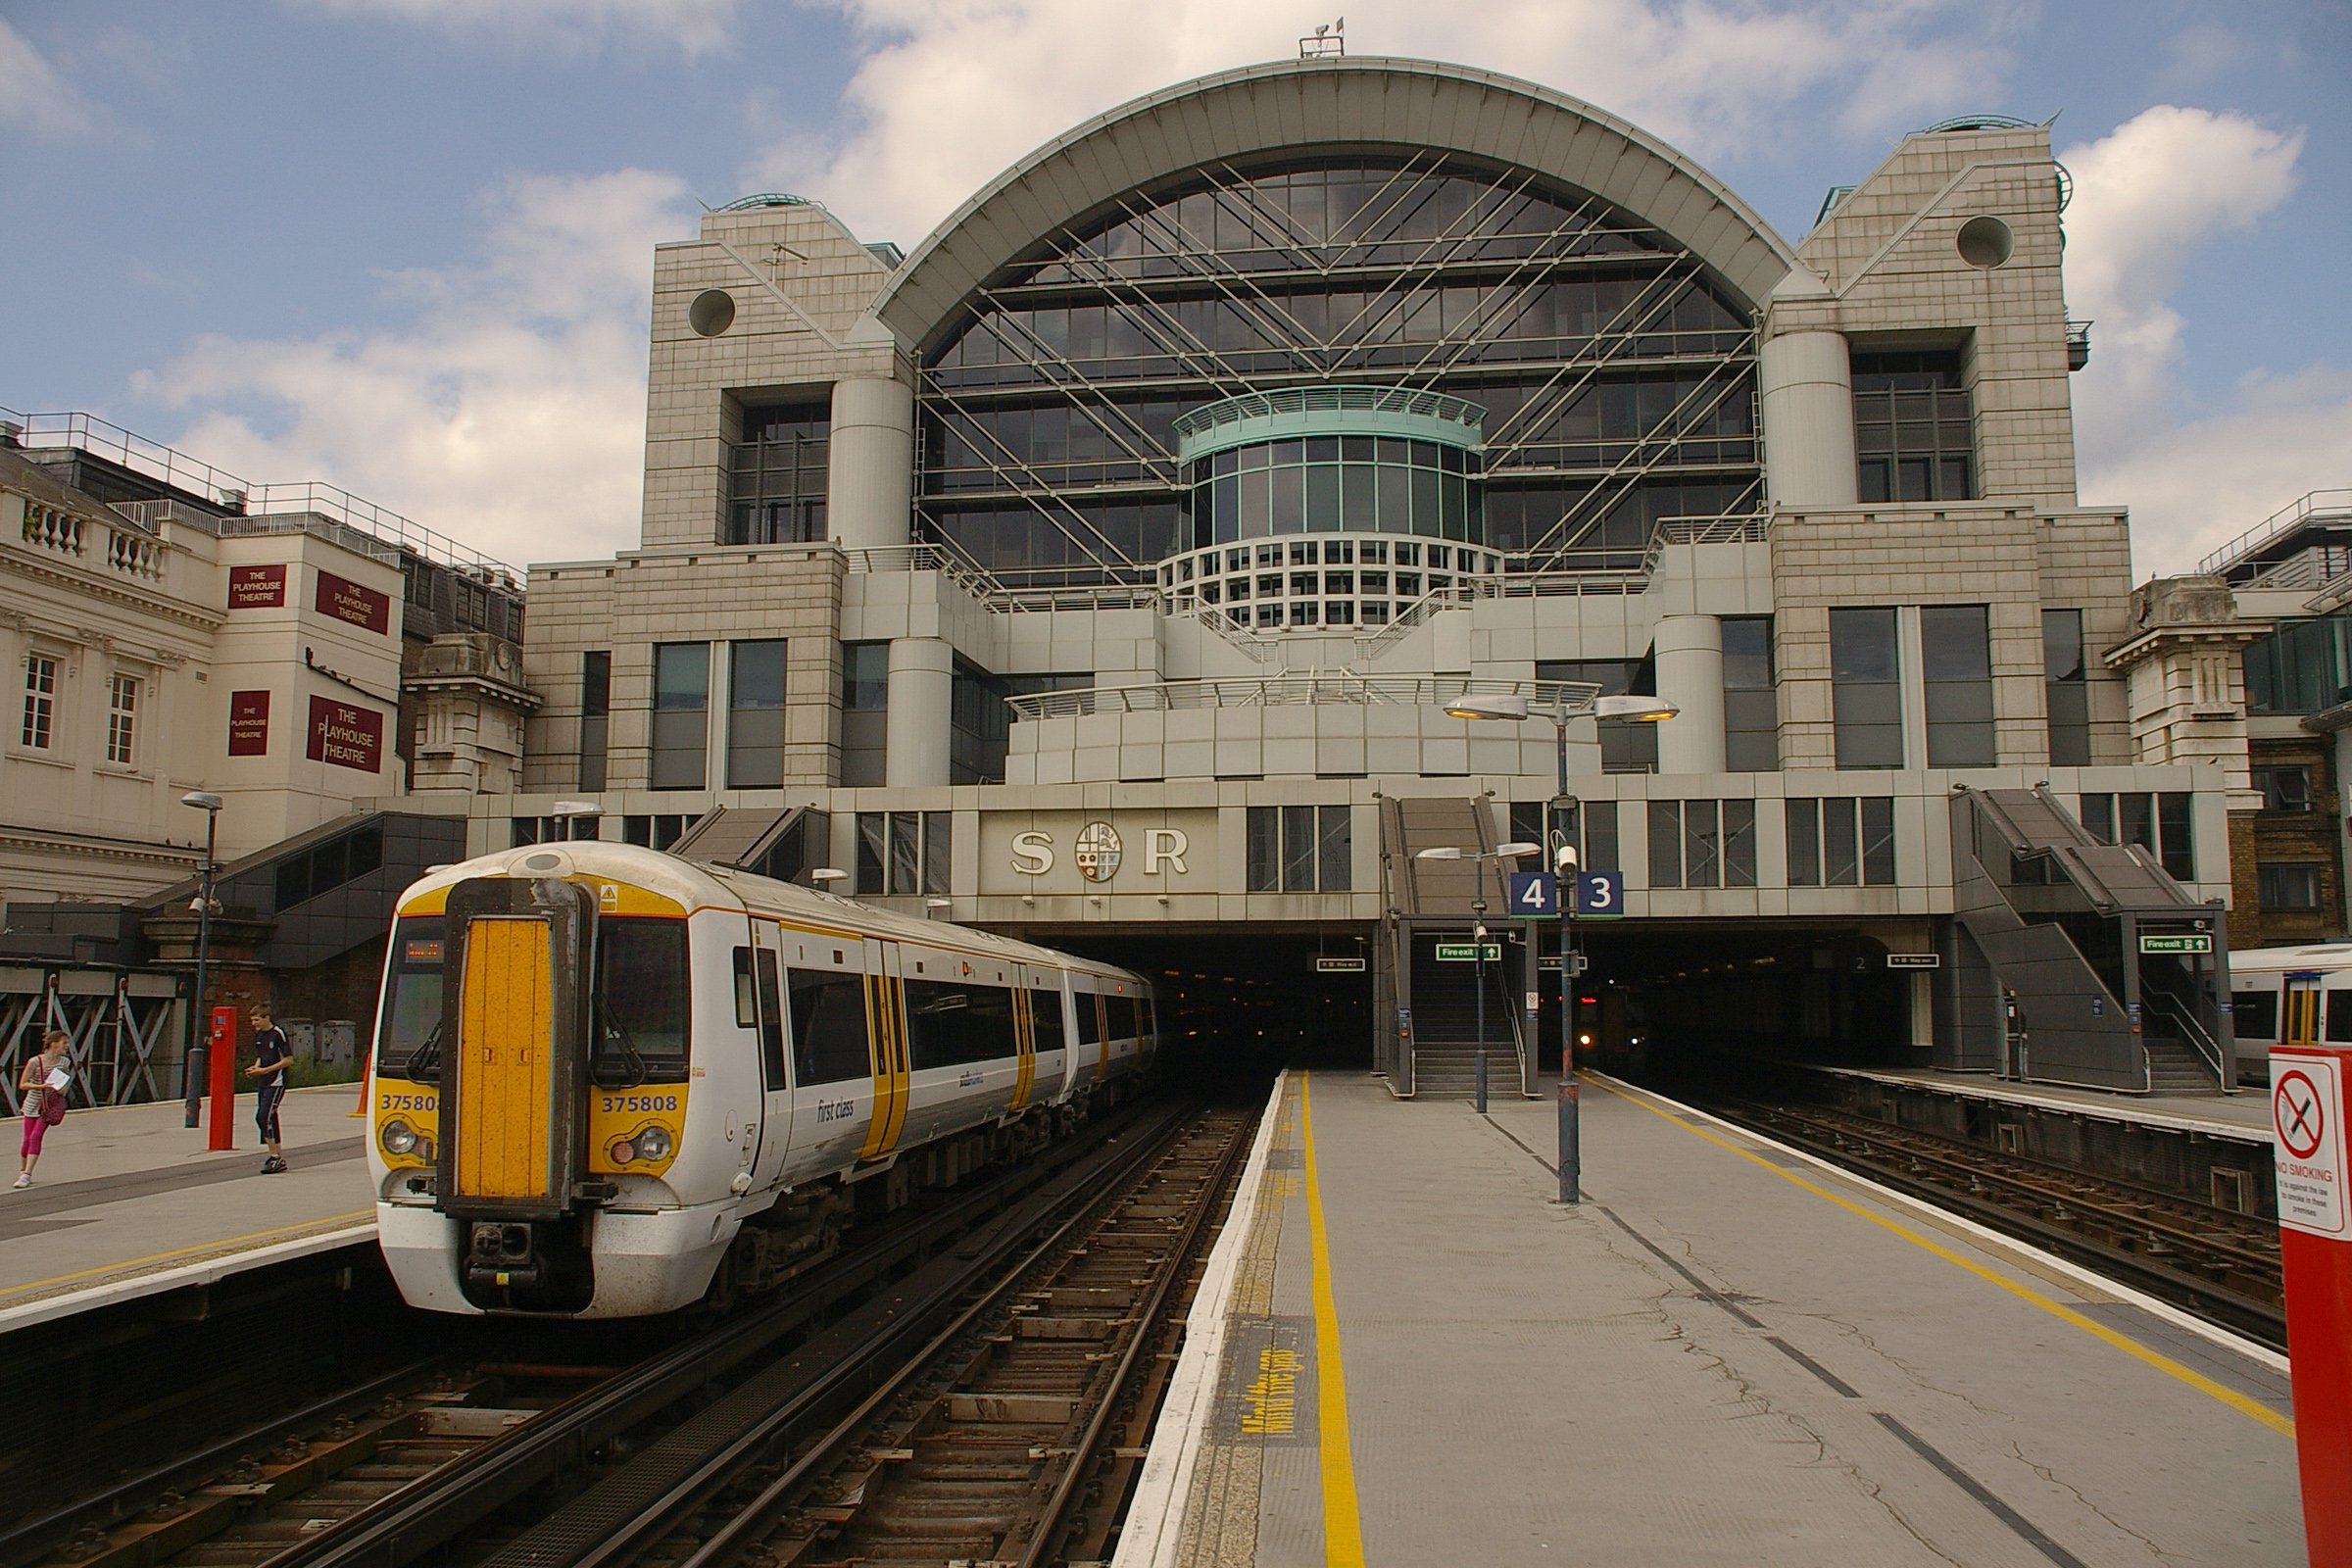 Railways london. Вокзал Чаринг кросс. Вокзал Чаринг кросс в Лондоне. Железнодорожный вокзал Чаринг - кросс-. Чаринг-кросс (станция метро).